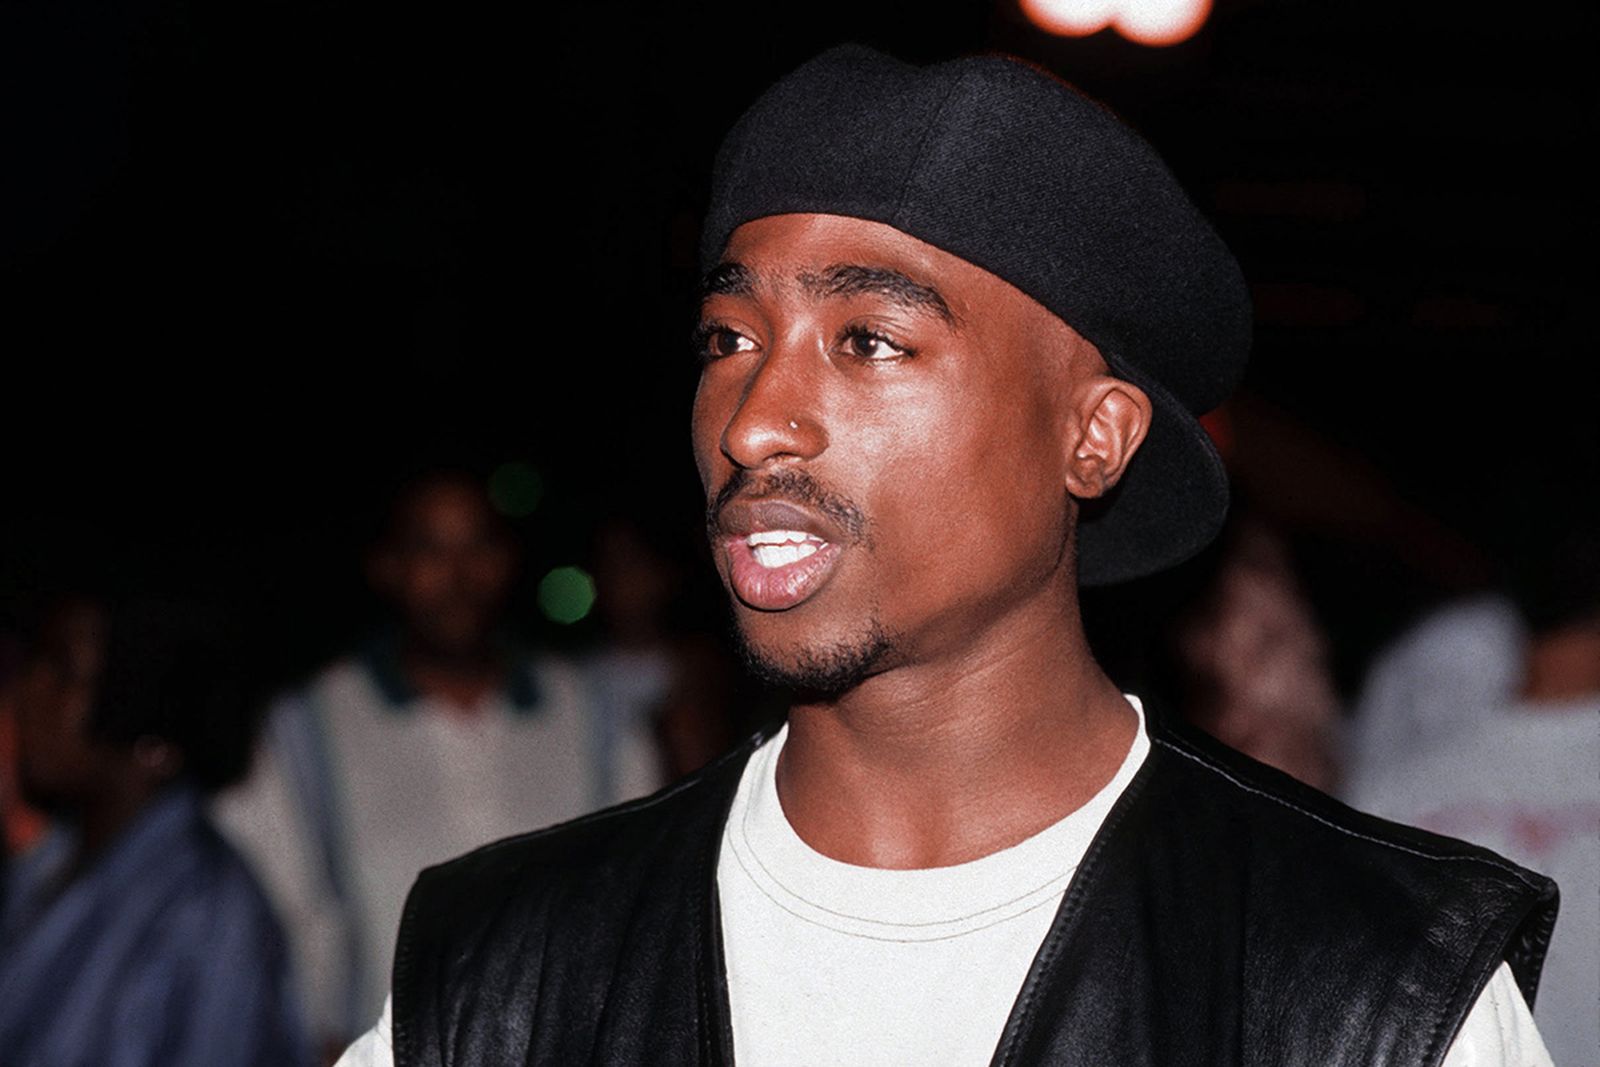 Tupac Shakur poses for a portrait at Club Amazon